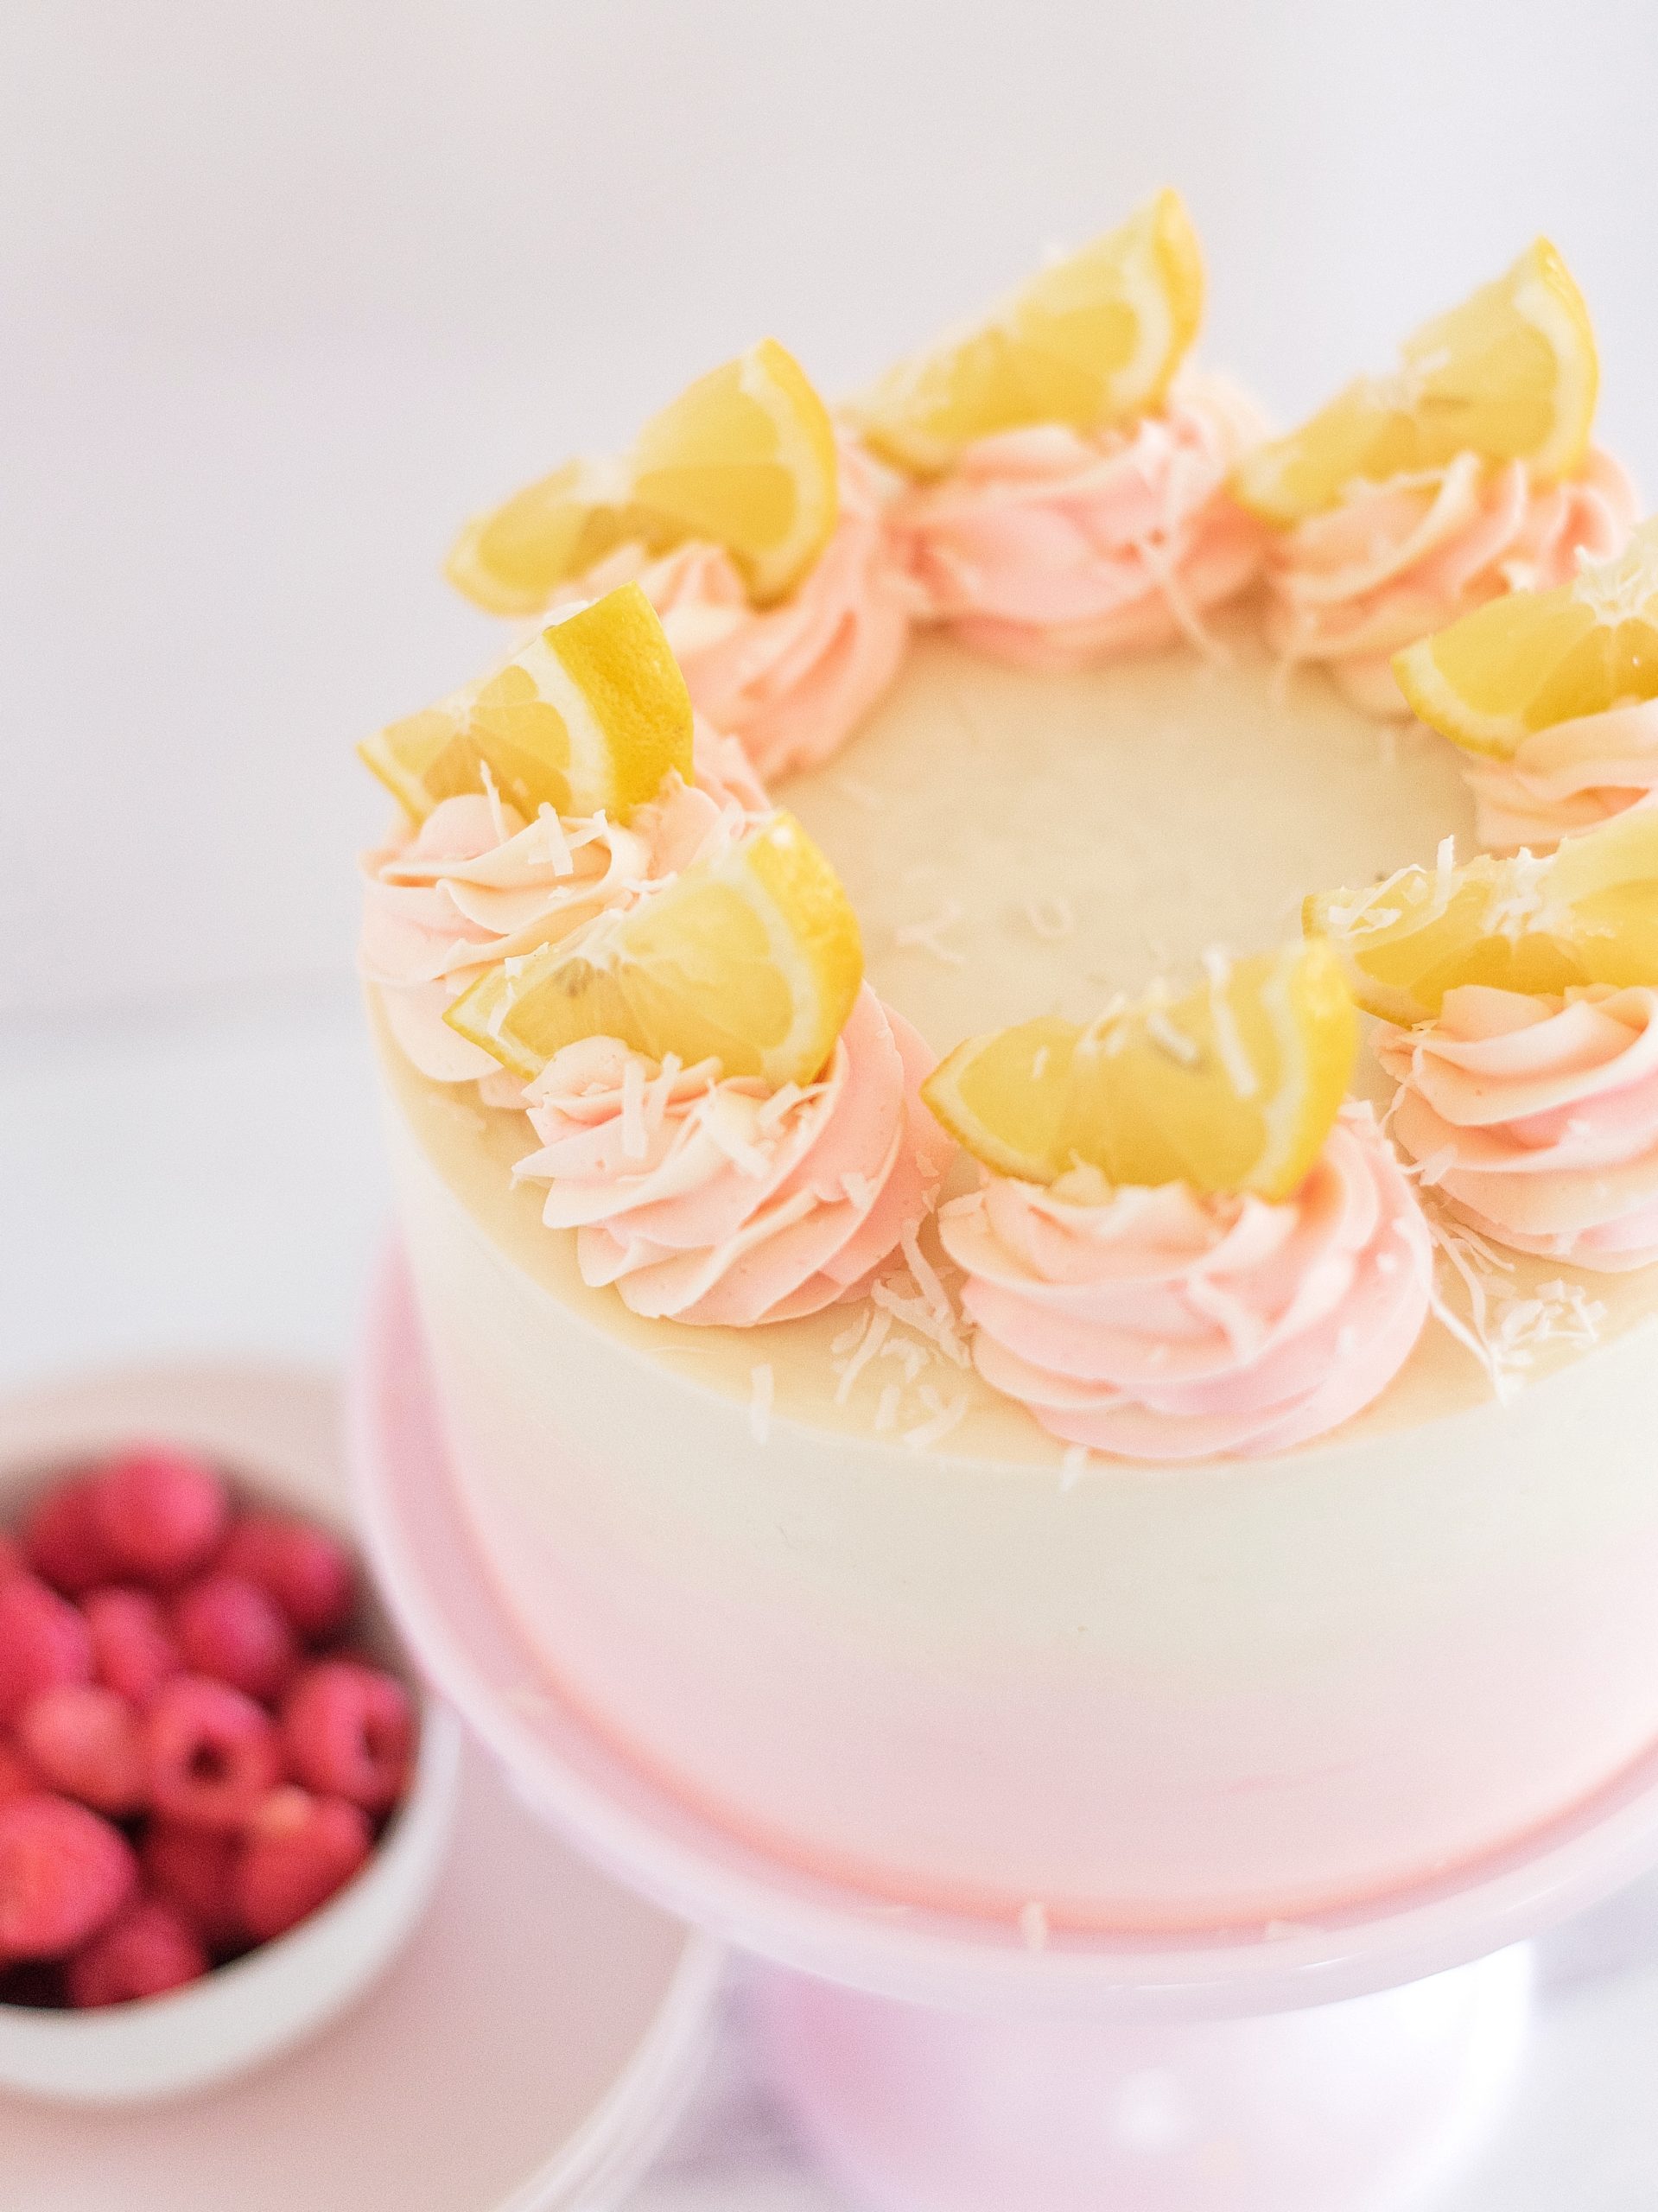 Coconut Lemon Raspberry Cake - coconut cake layers, lemon curd, raspberry cream filling, and coconut buttercream. #cakebycourtney #coconutcake #bestcoconutcake #lemoncurd #raspberrycream #raspberryfilling #coconutbuttercream #summercake #bestsummerdessertrecipes #summercakes #summerdessertrecipes 